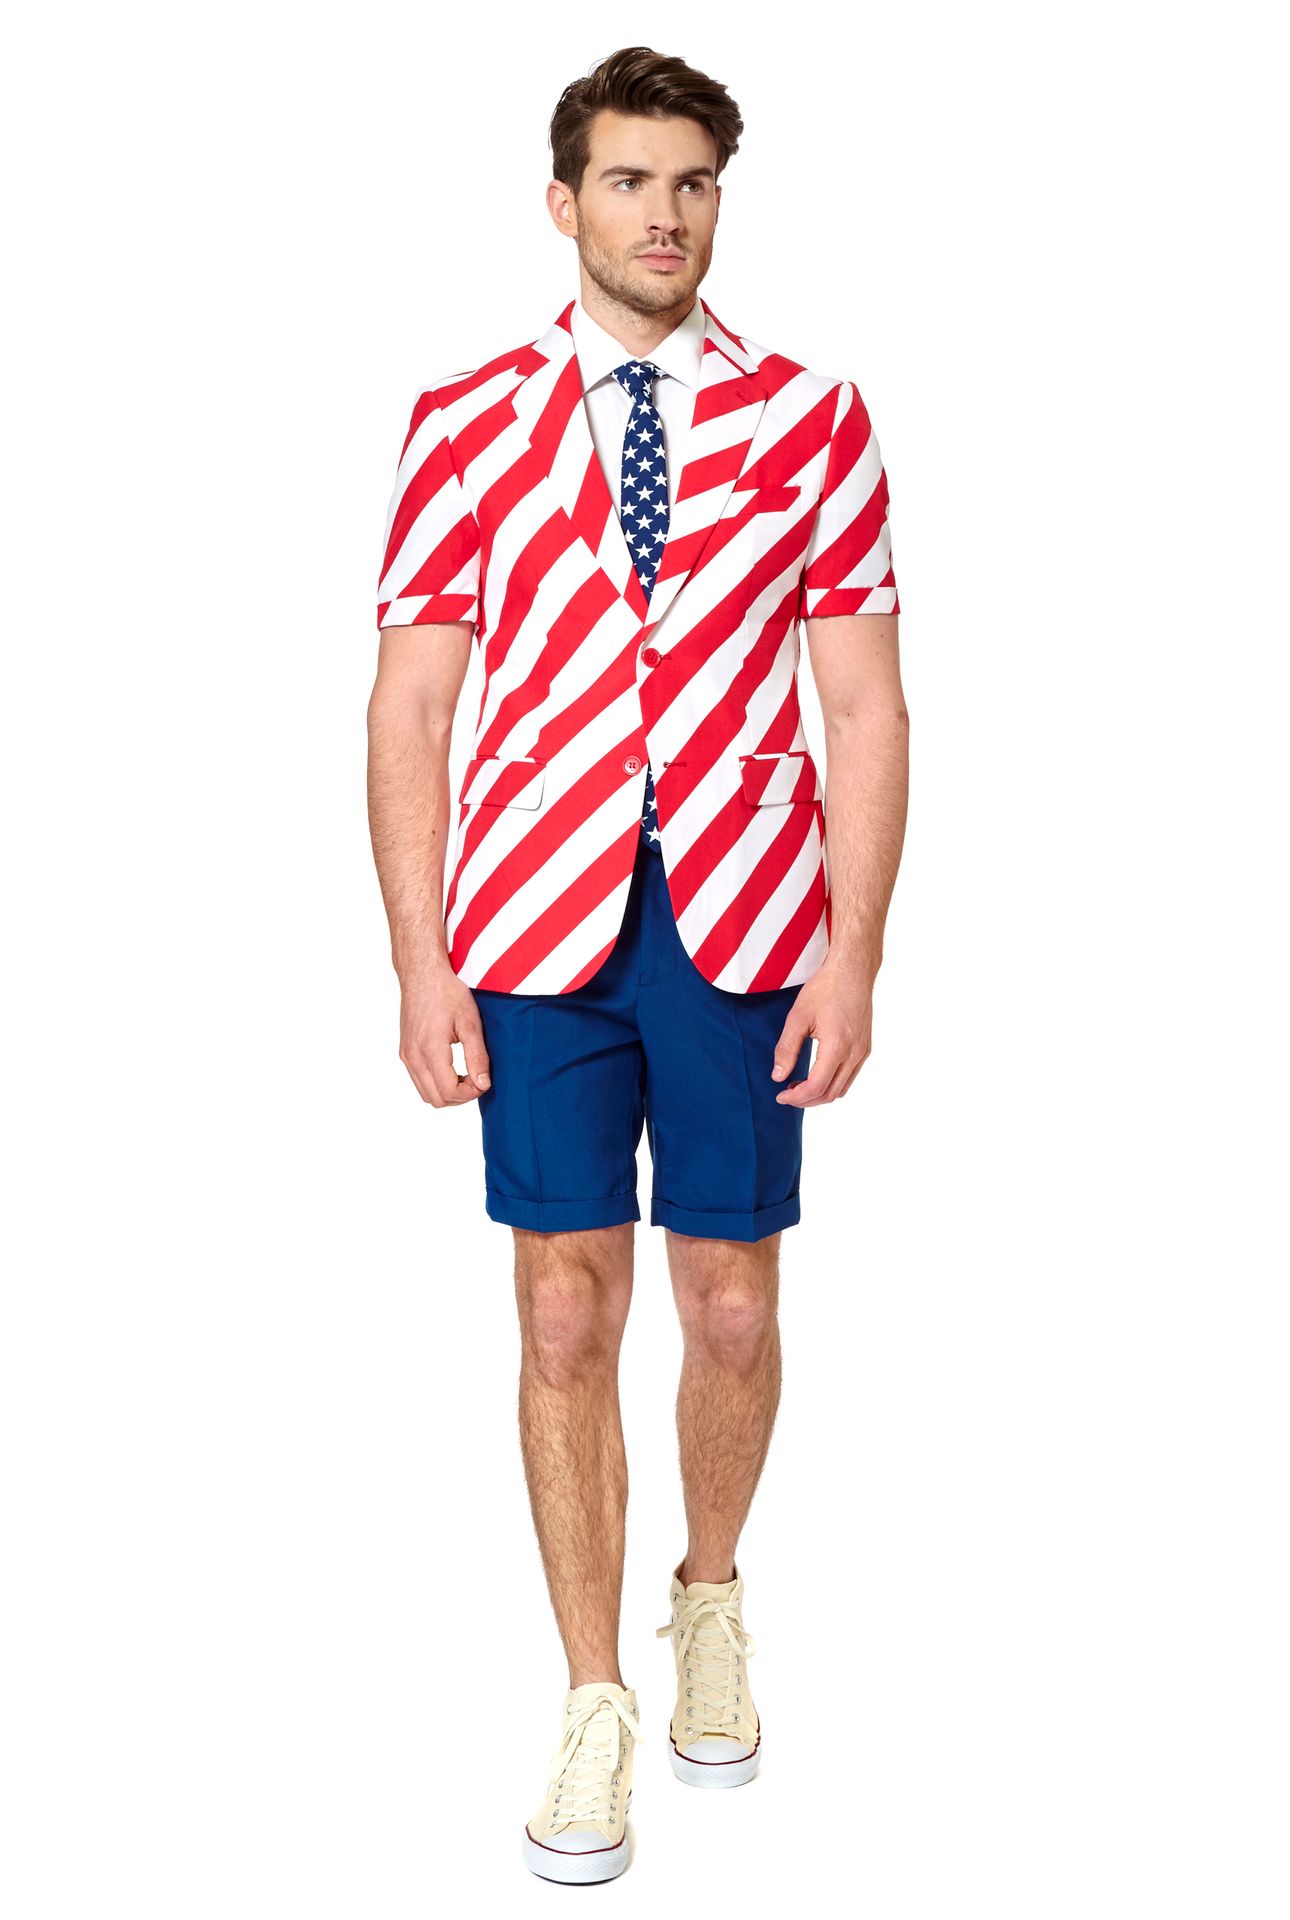 USA Opposuits zomer kostuum